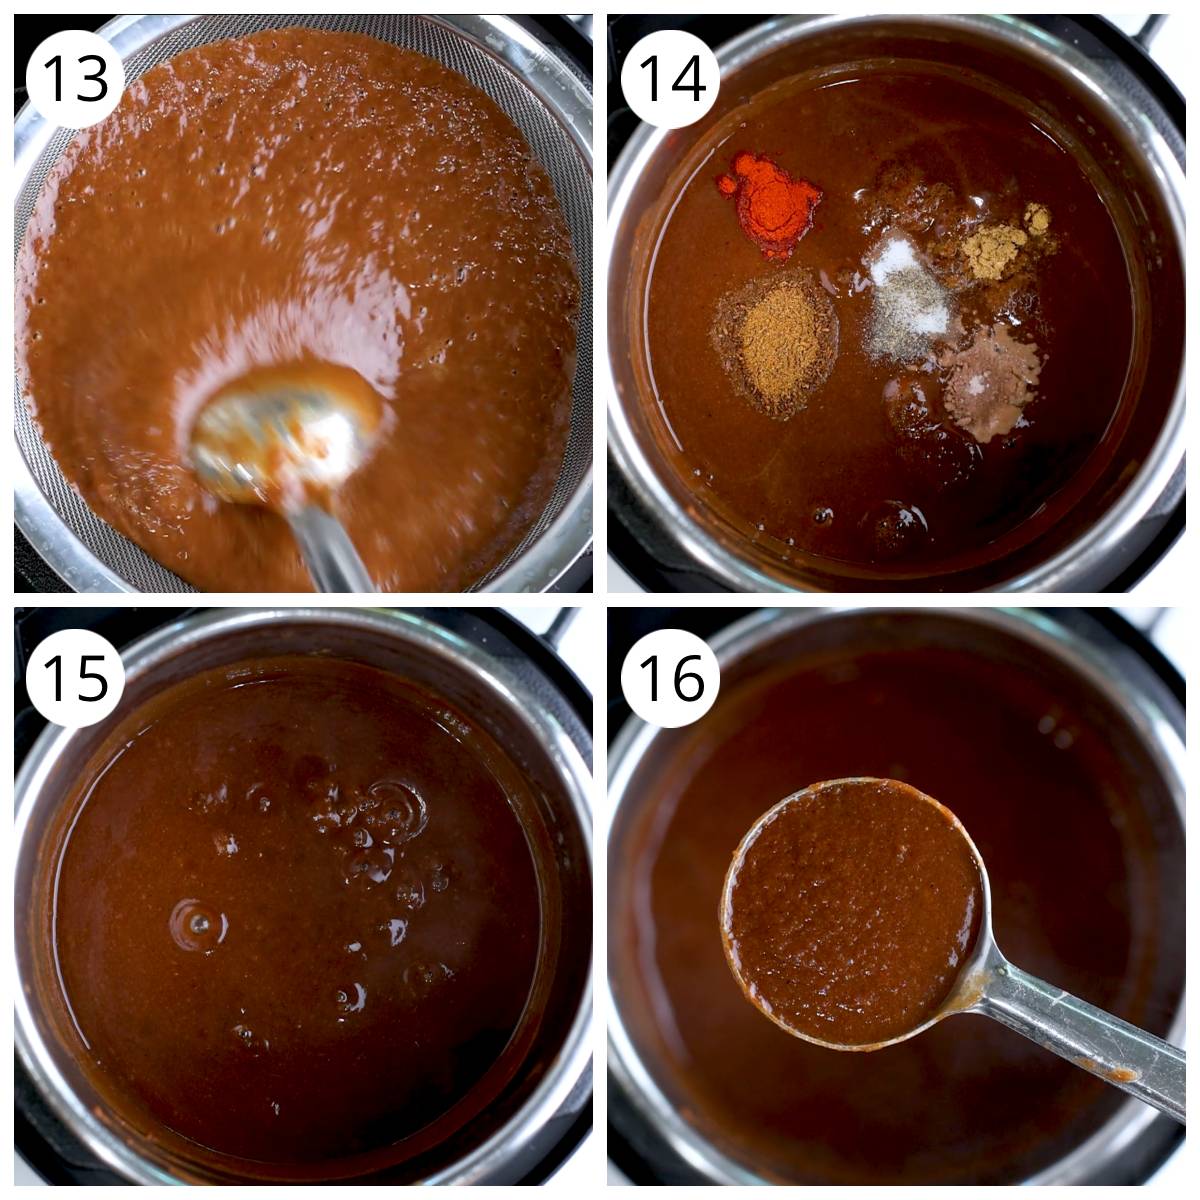 Steps to add spices to tamarind chutney